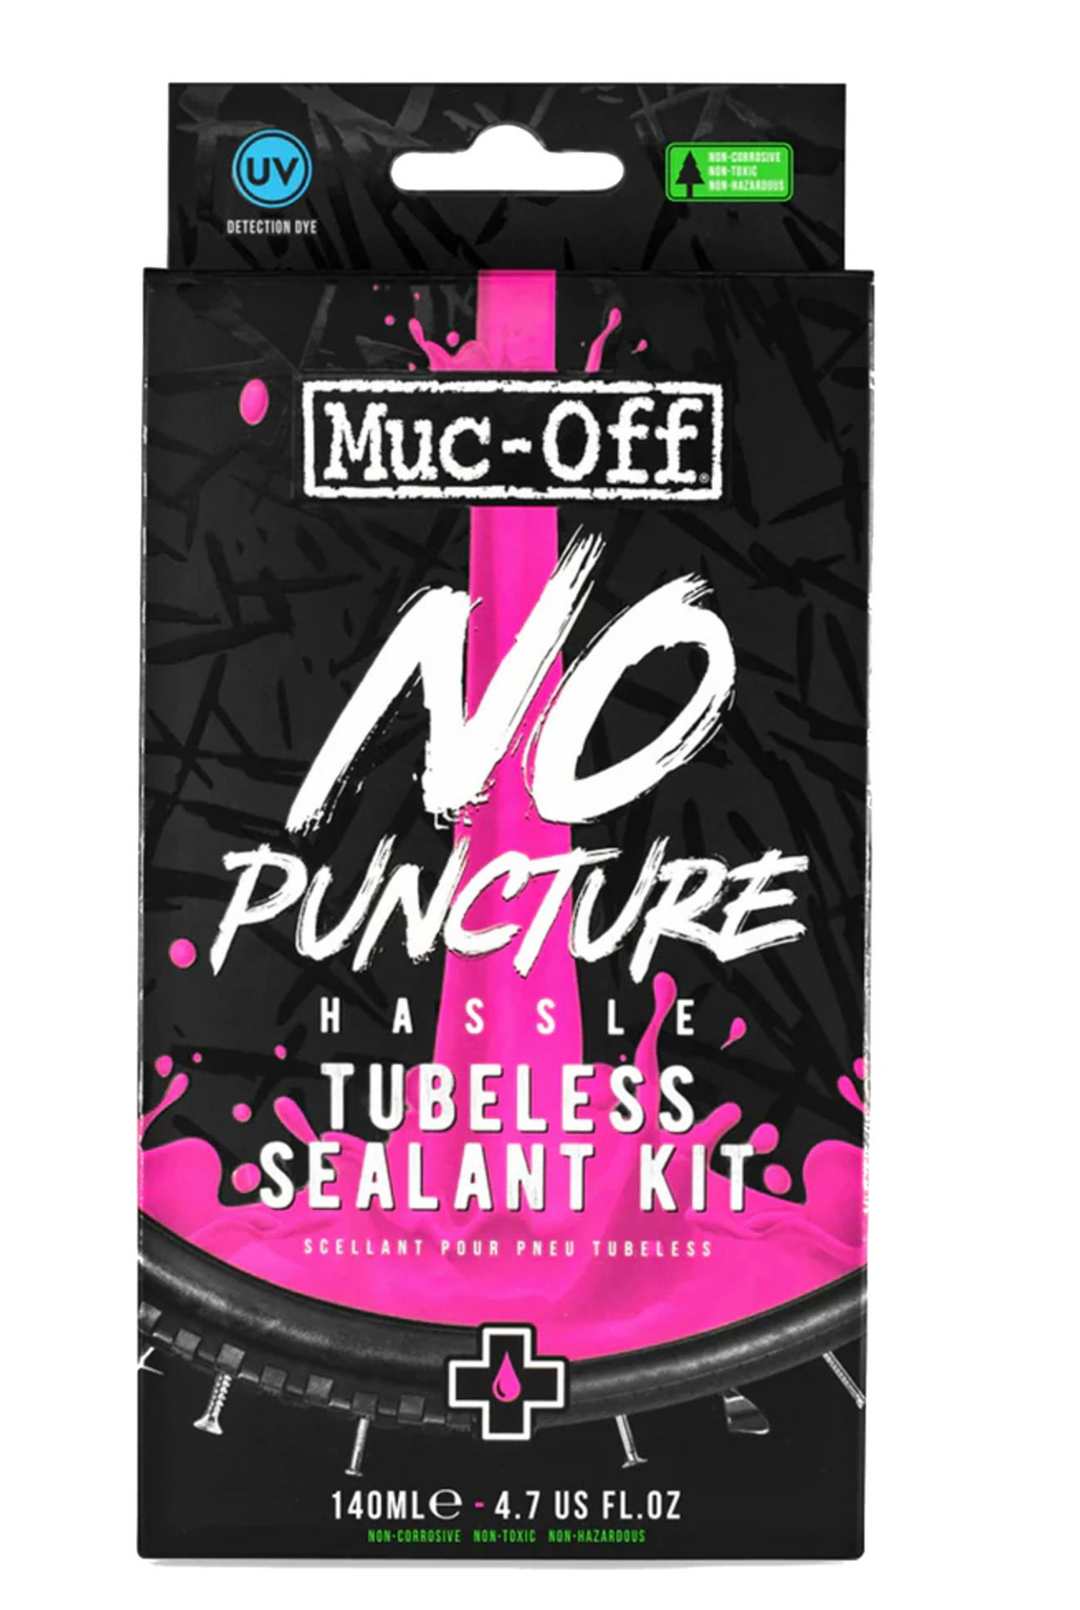 Sealant No Puncture 140ml Kit - Mackay Cycles - [product_SKU] - Muc-Off